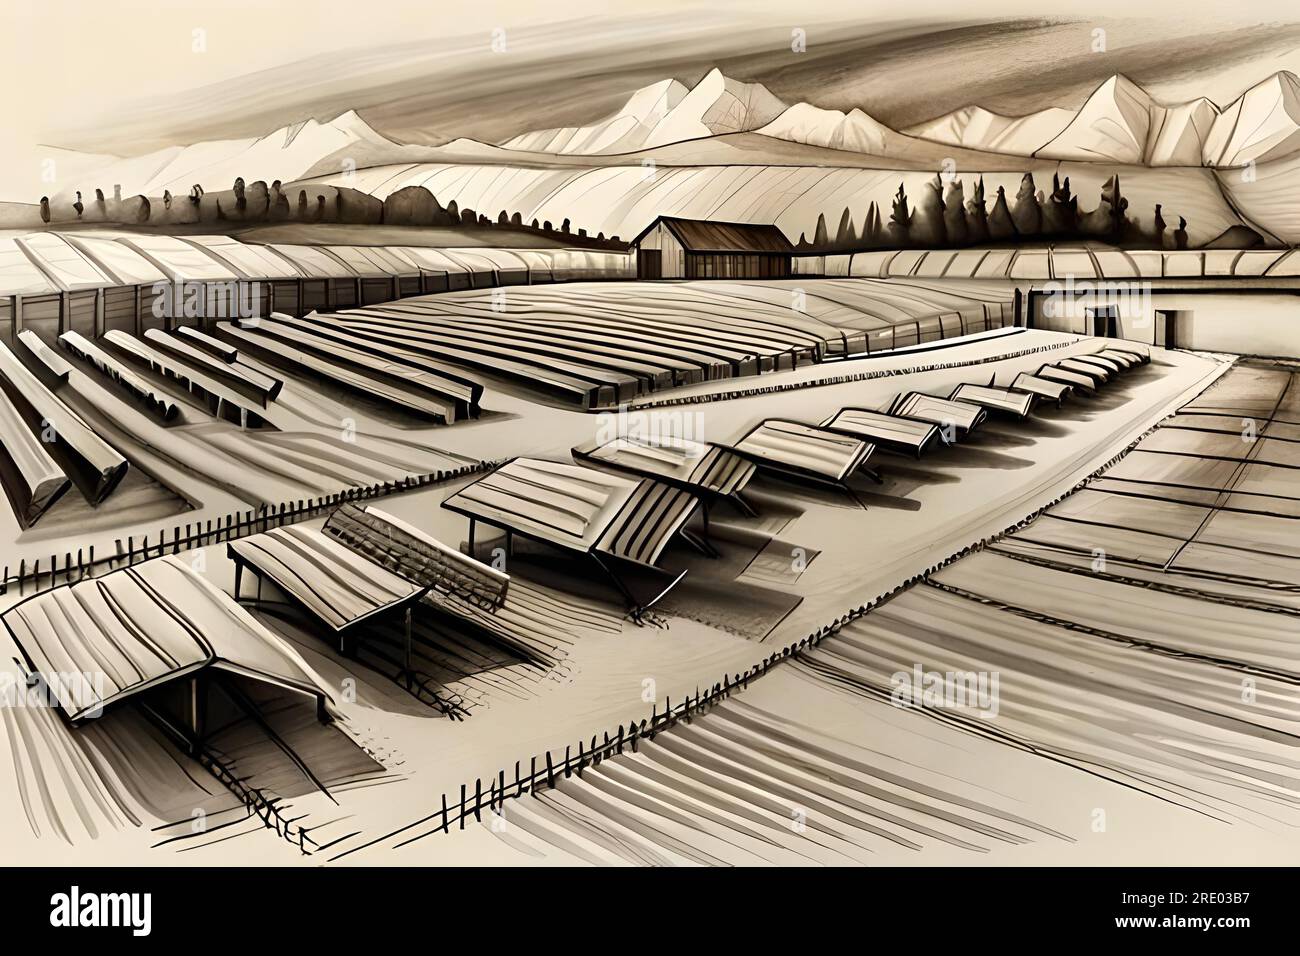 Solar farm sketch Stock Photo